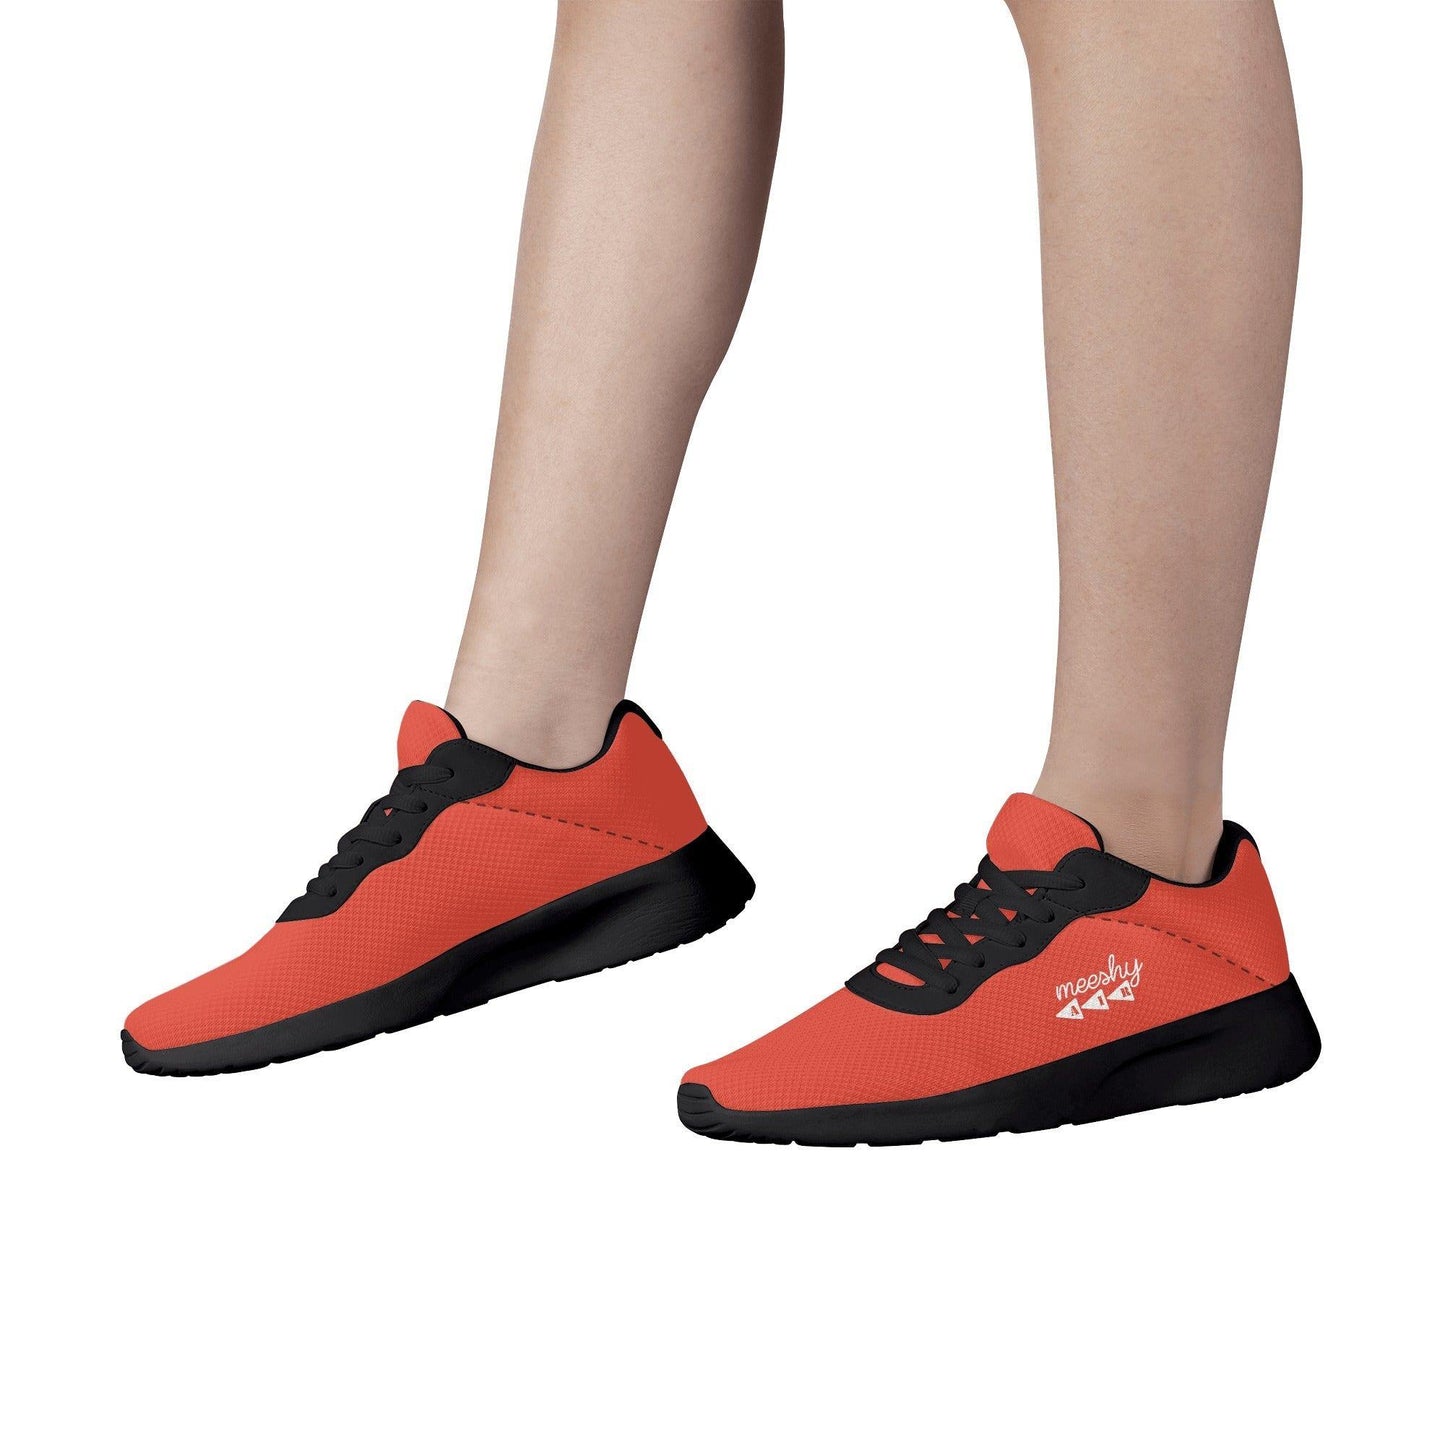 Orange Red Damen Meeshy AIR Laufschuhe Laufschuhe 83.99 AIR, Damen, Laufschuhe, Meeshy, Orange, Red JLR Design